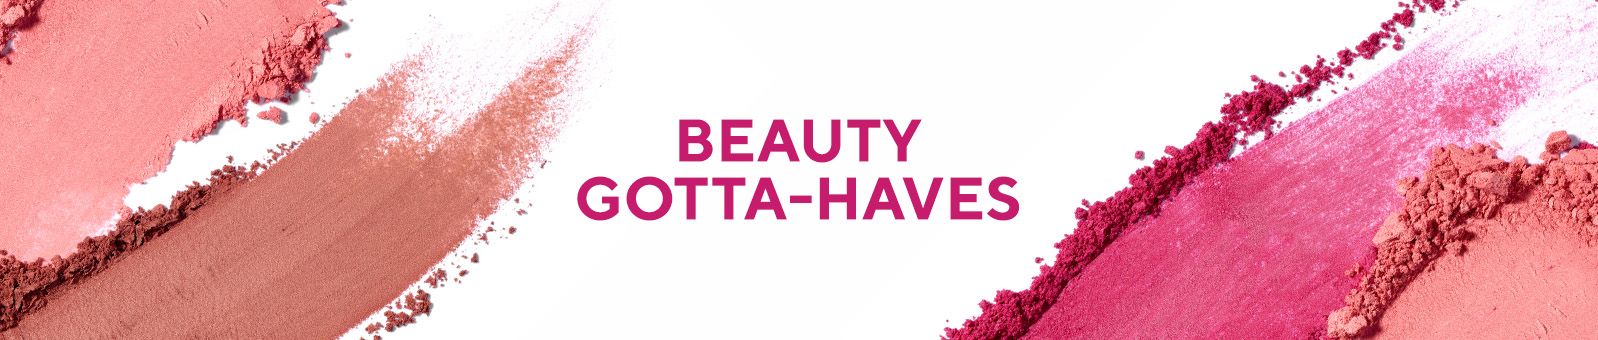 Beauty Gotta-Haves